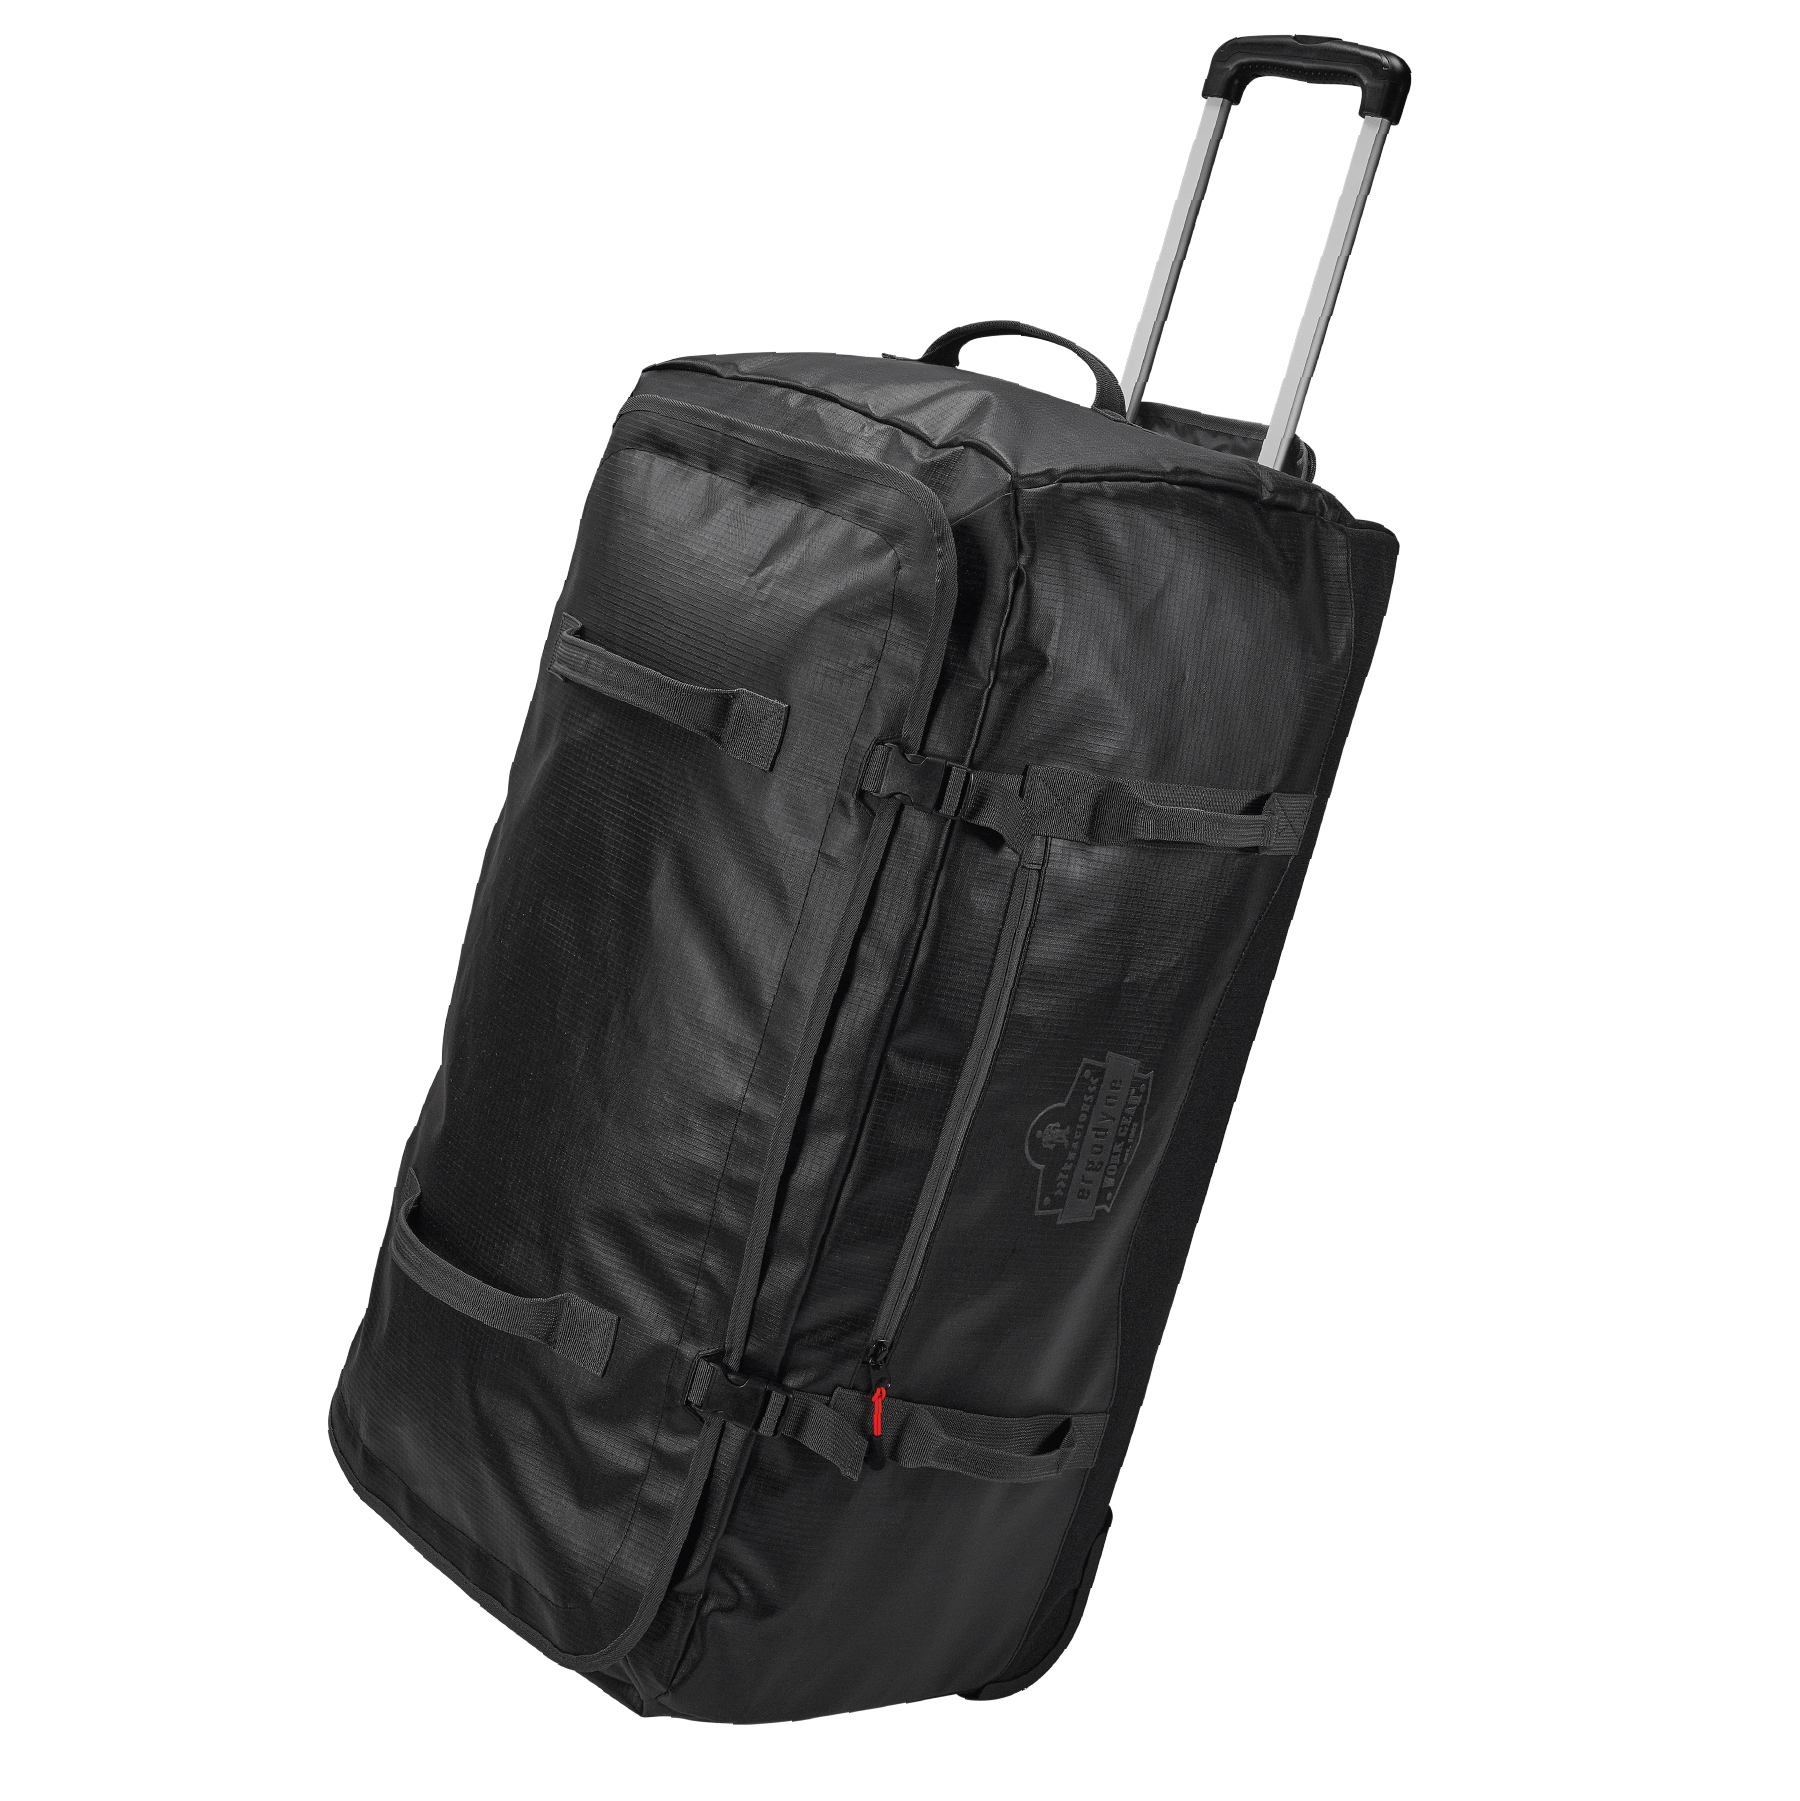 https://www.ergodyne.com/sites/default/files/product-images/5032-water-resistant-wheeled-duffel-bag-black-front.jpg